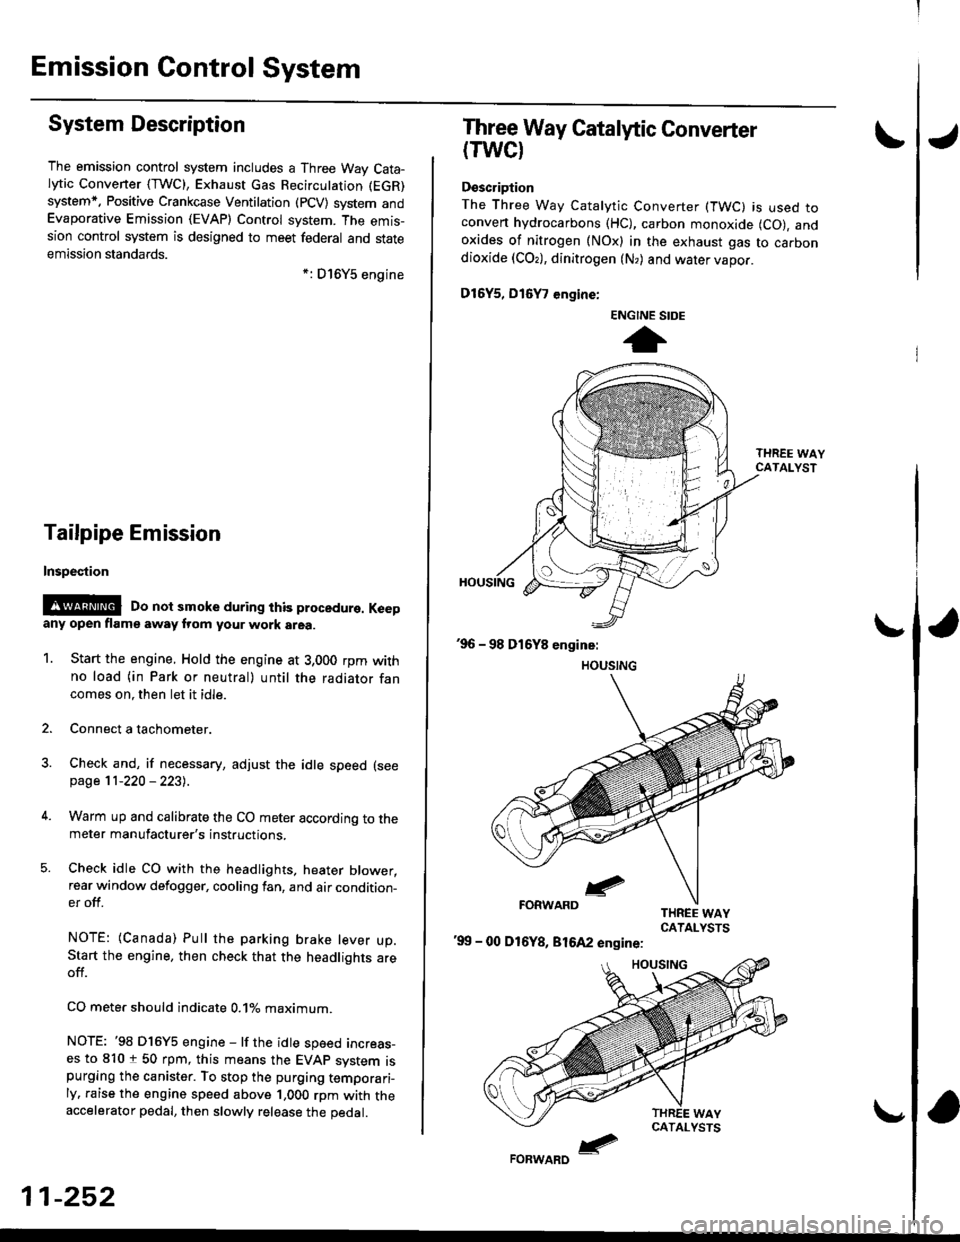 HONDA CIVIC 1998 6.G Workshop Manual Emission Gontrol System
System Description
The emission control system includes a Three Way Cata-lytic Convener (TWC), Exhaust Gas Recirculation (EGR)
system,. Positive Crankcase Ventilation (pCV) sys